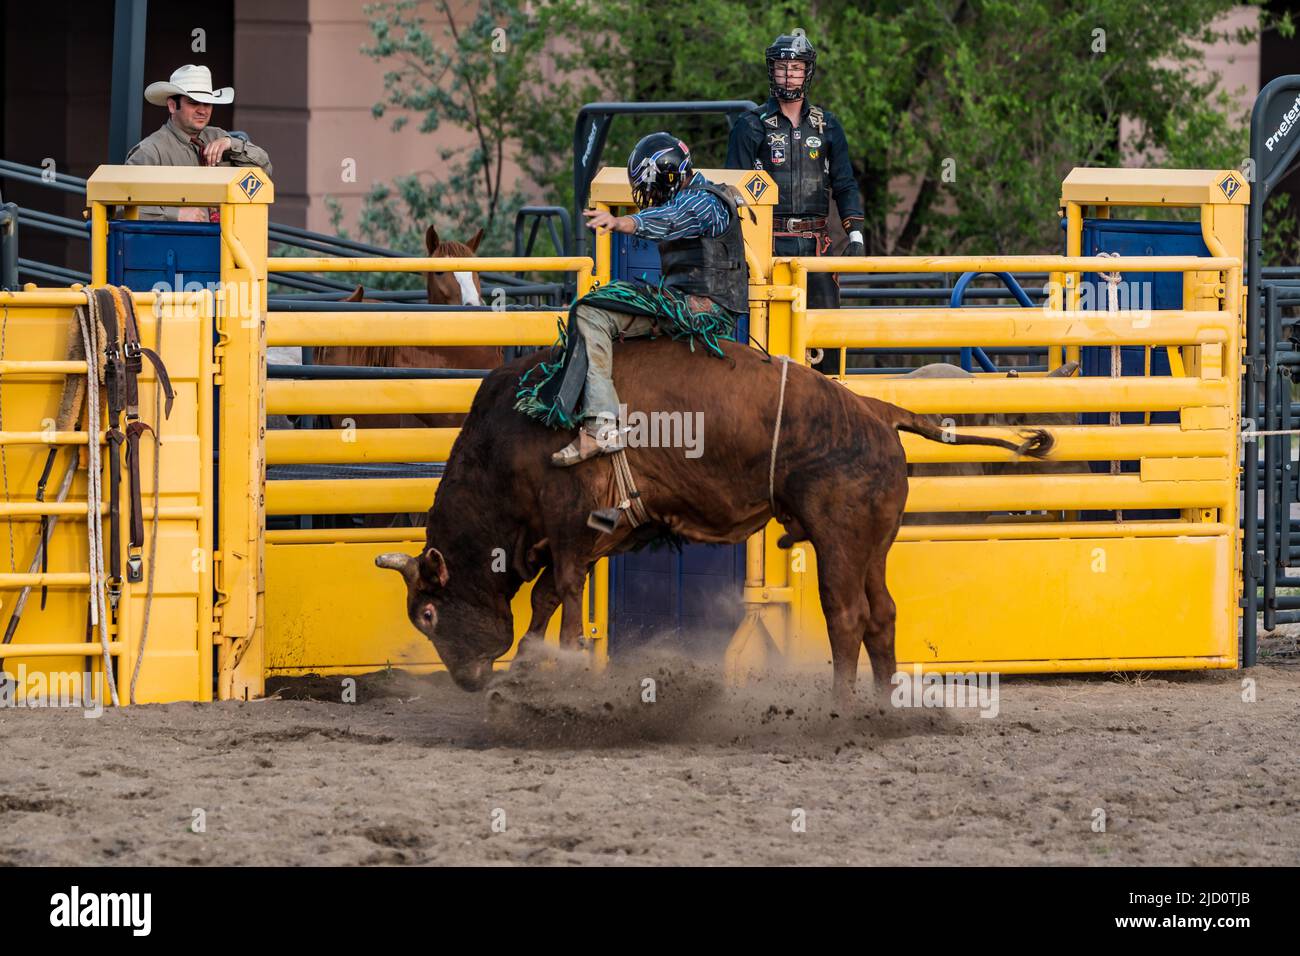 Bull riding at Rodeo in Colorado Springs, Colorado Stock Photo